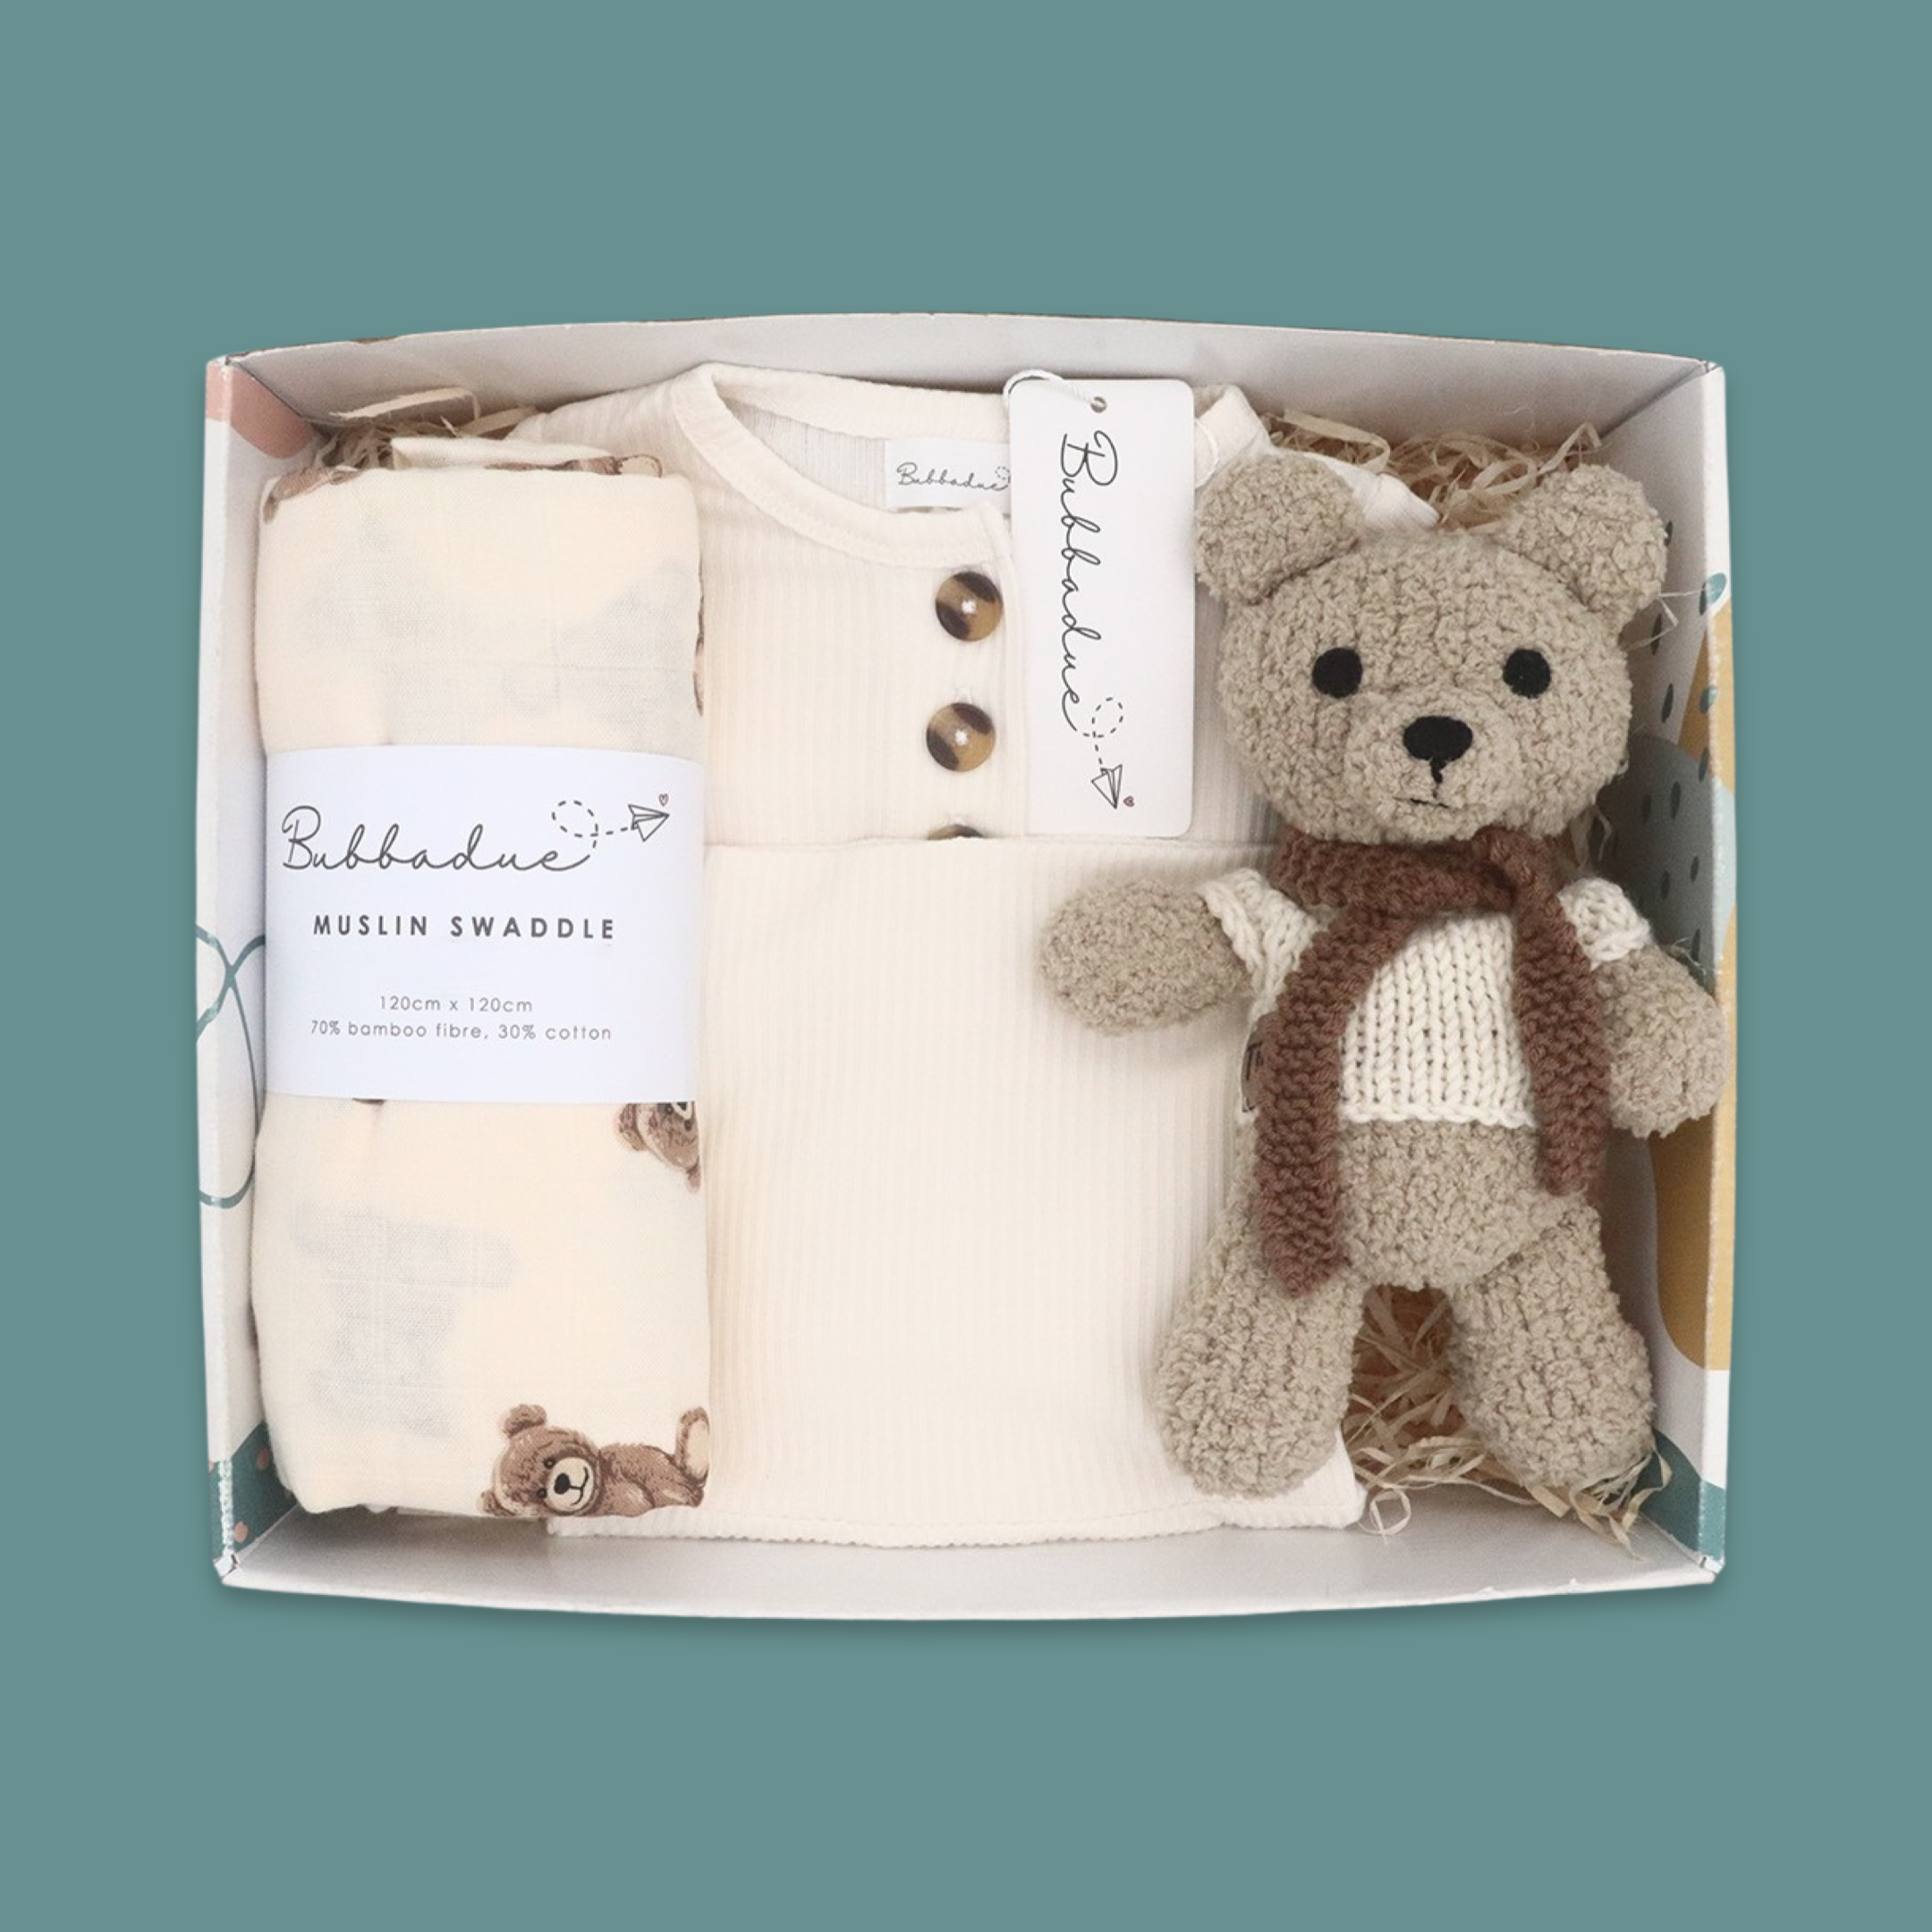 The Alexander Box - Baby Gift Box - Bubbadue